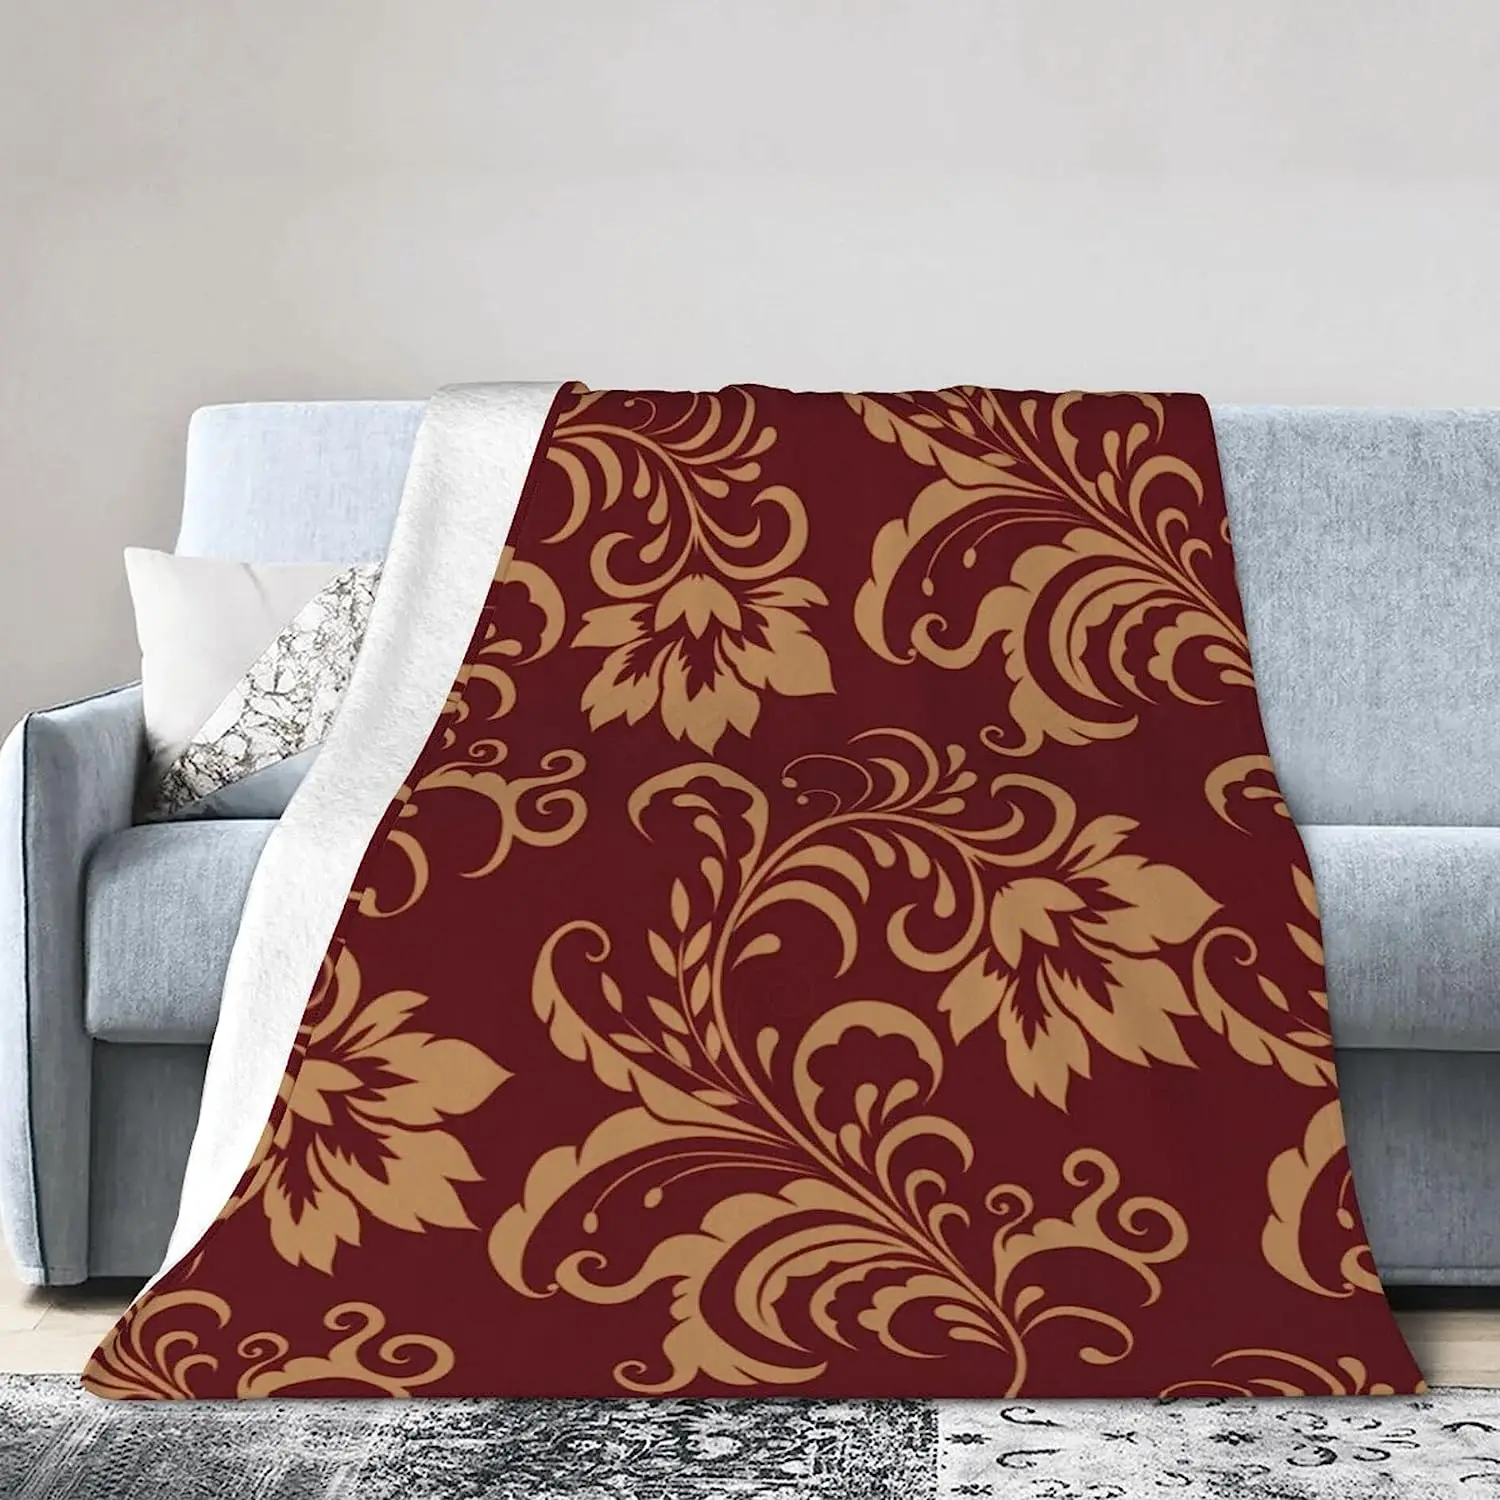 Softest Blanket Throws Lightweight Flower Maroon Gold Floral Classy Burgundy Antique Plush Throw Blankets